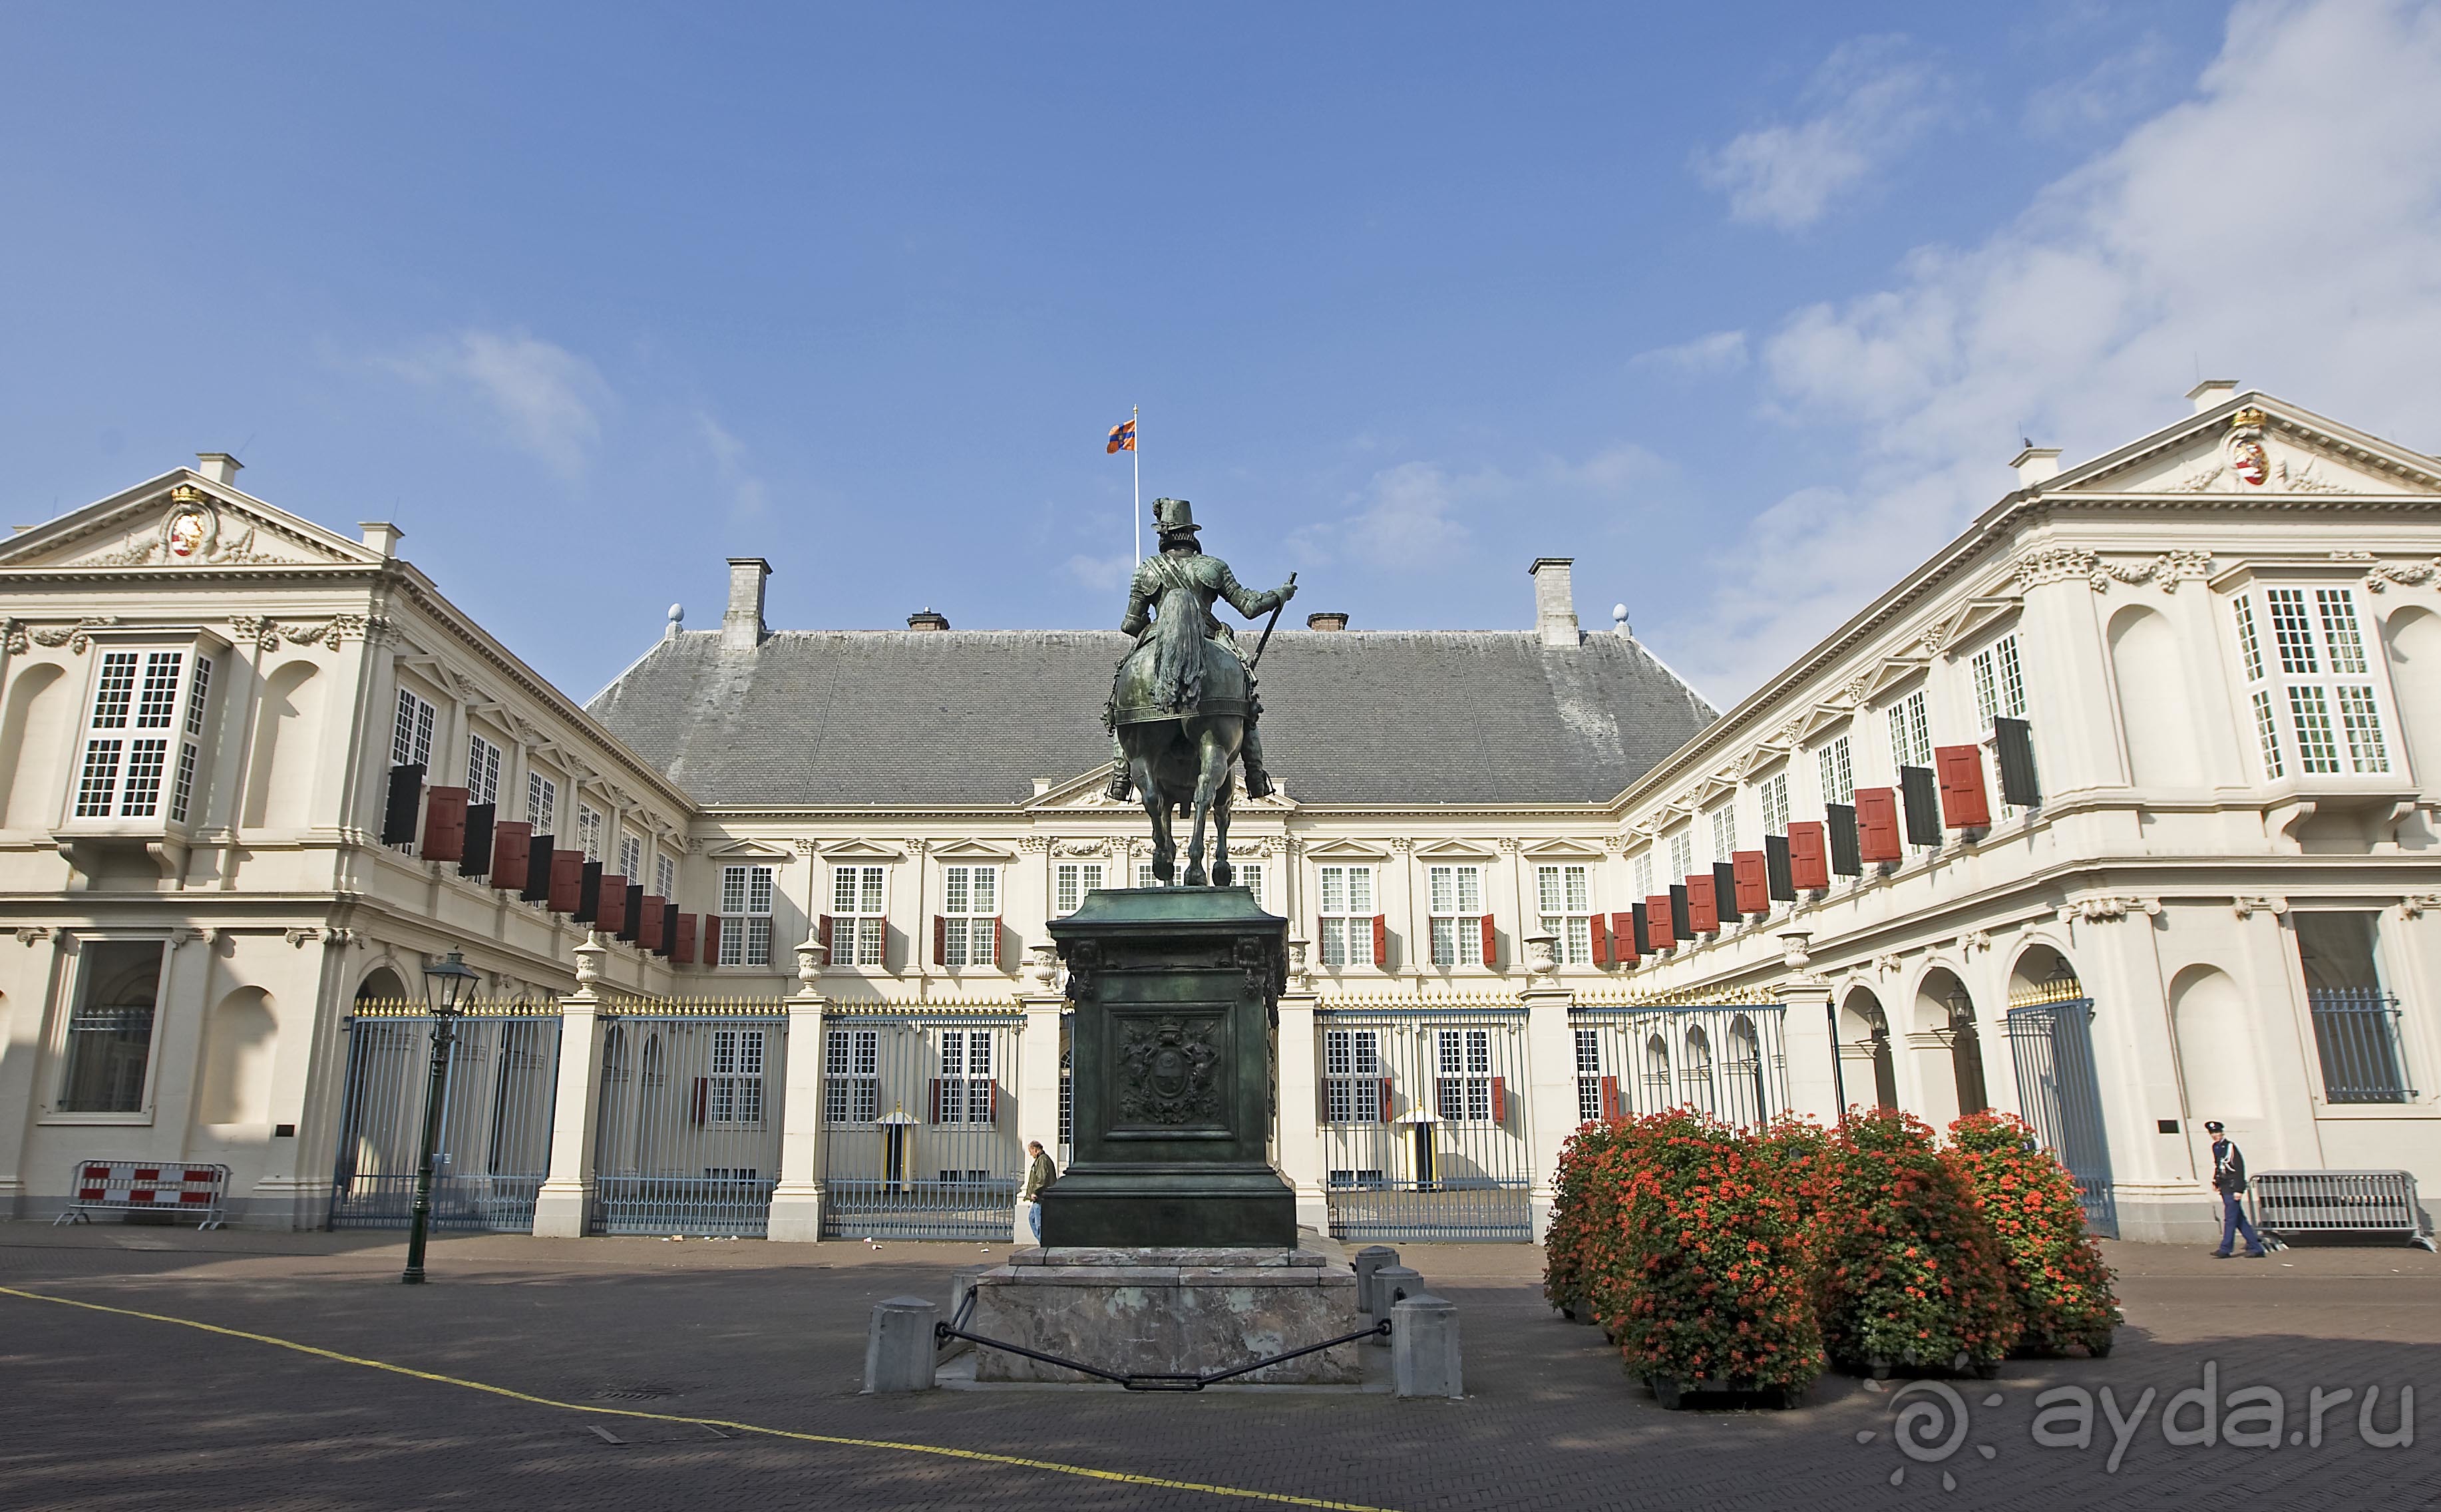 Столица фактически. Дворец Нордейнде Гаага. Королевский дворец в Гааге. Дворец короля Нидерландов в Гааге. Резиденция короля Нидерландов.